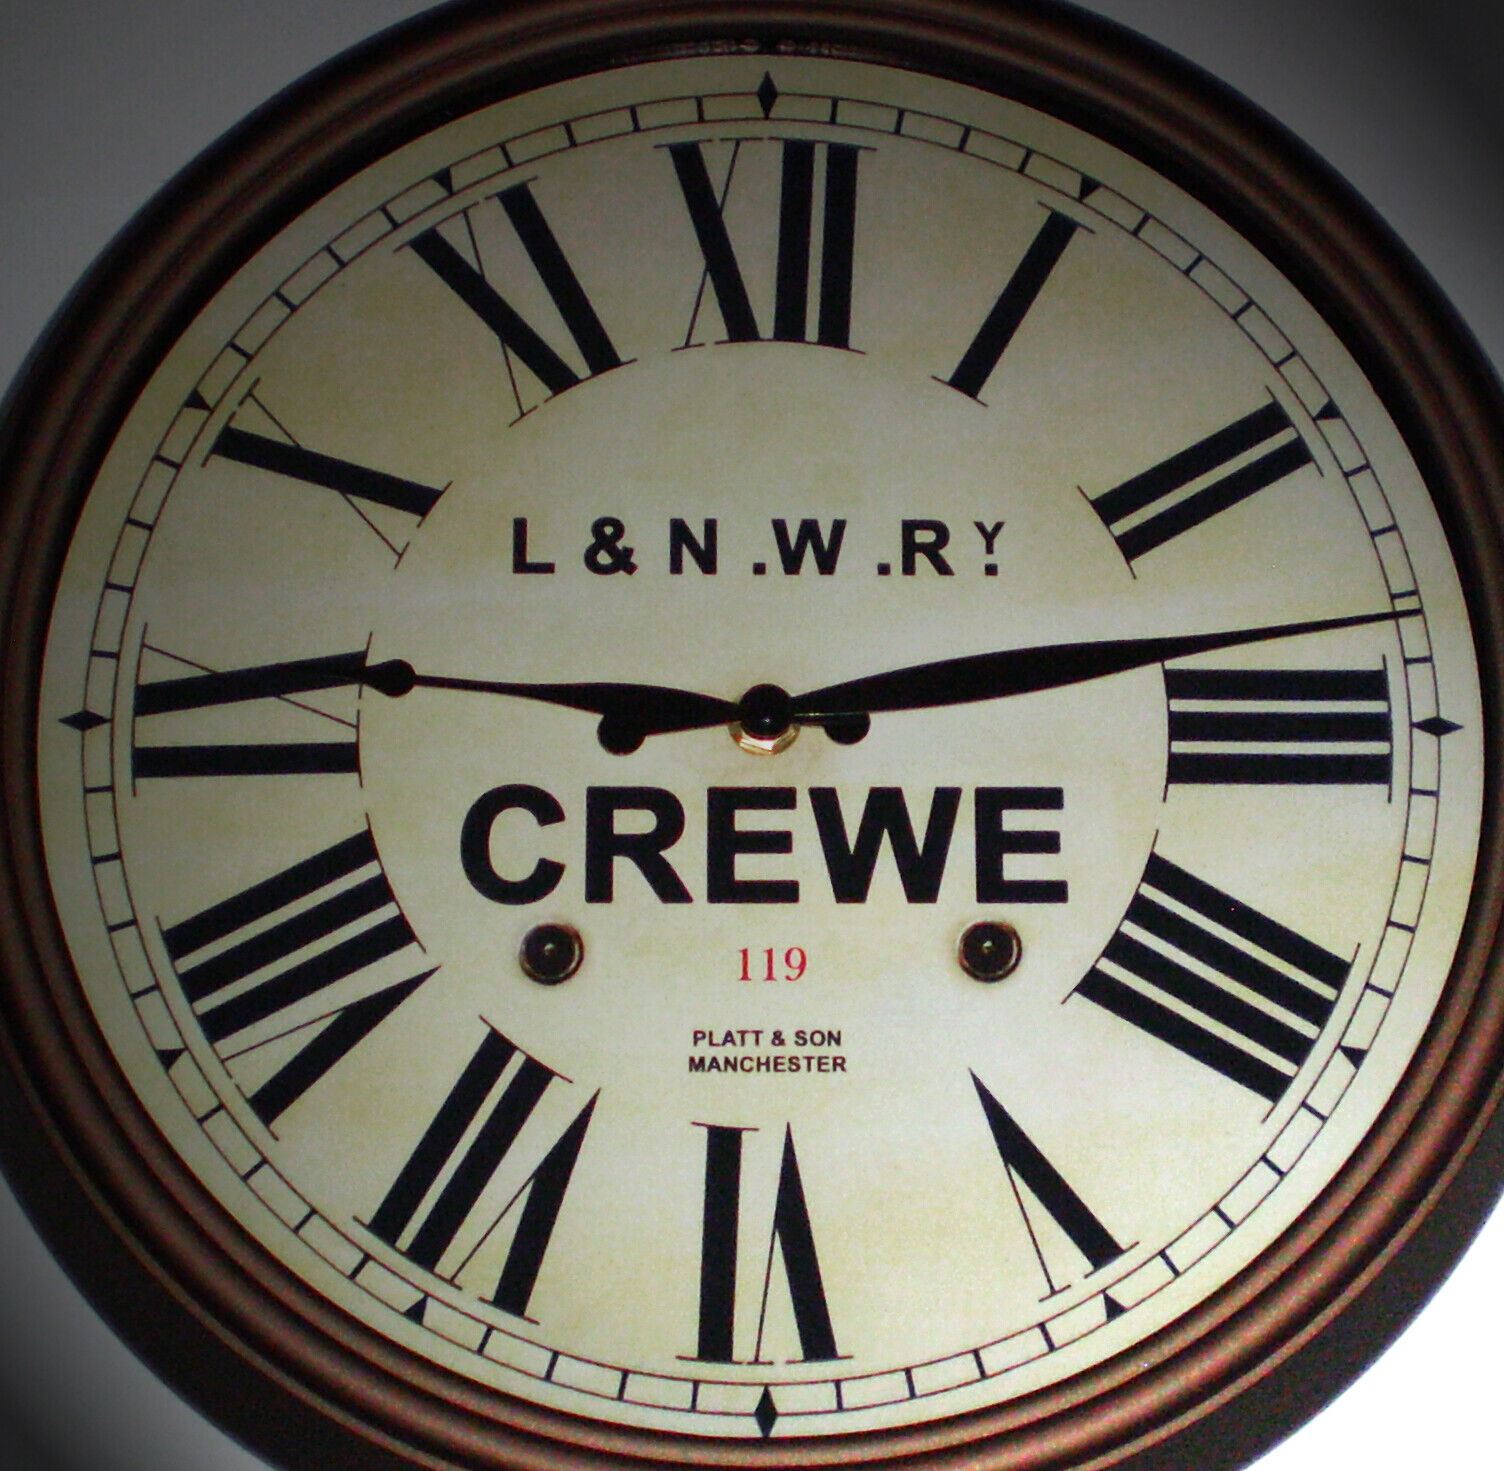 L&NWR London & North Western Railway, Station Wall Clock, Crewe Station